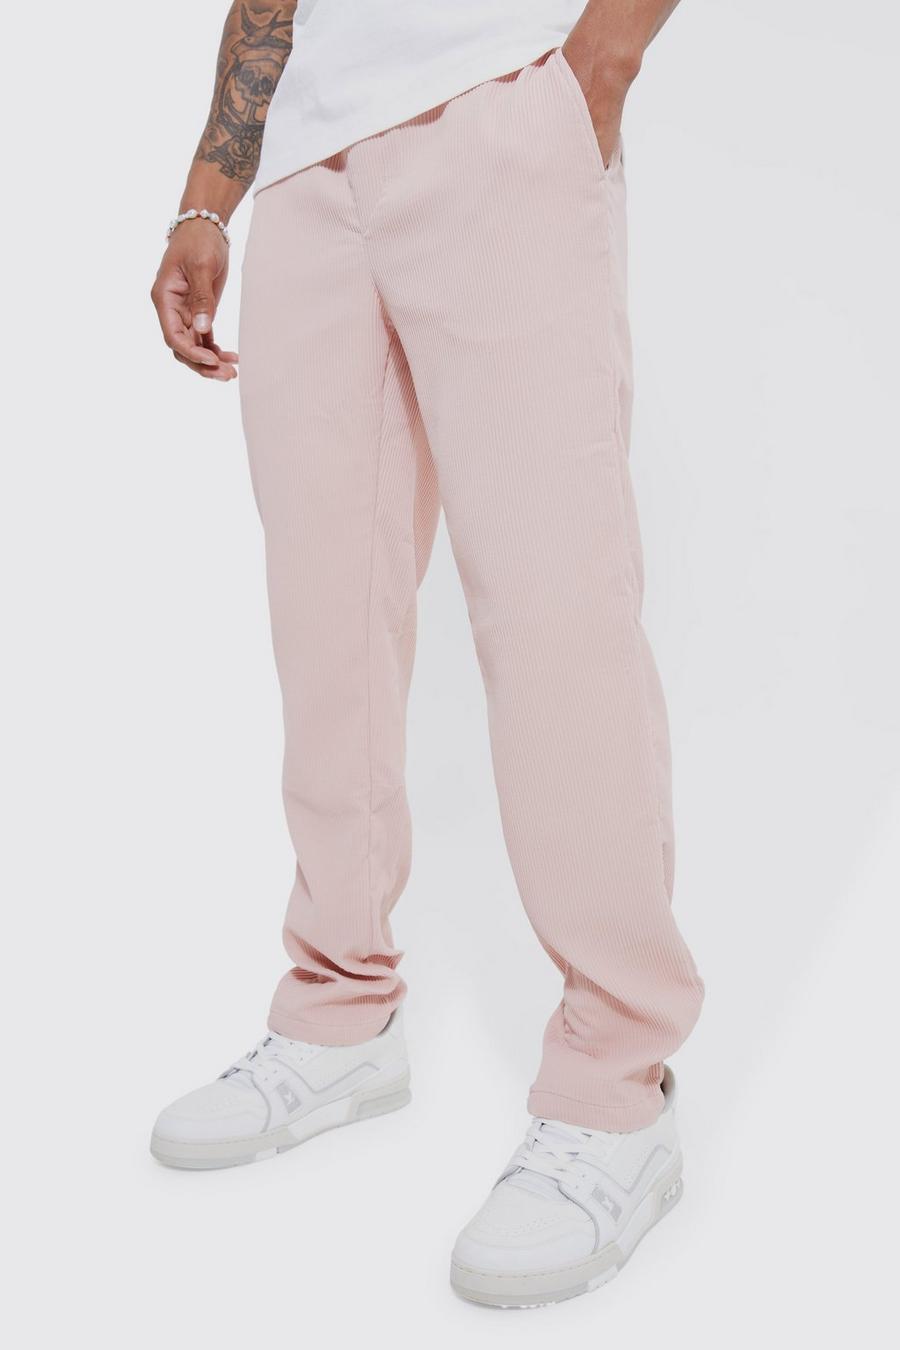 Pantalon court plissé, Light pink rosa